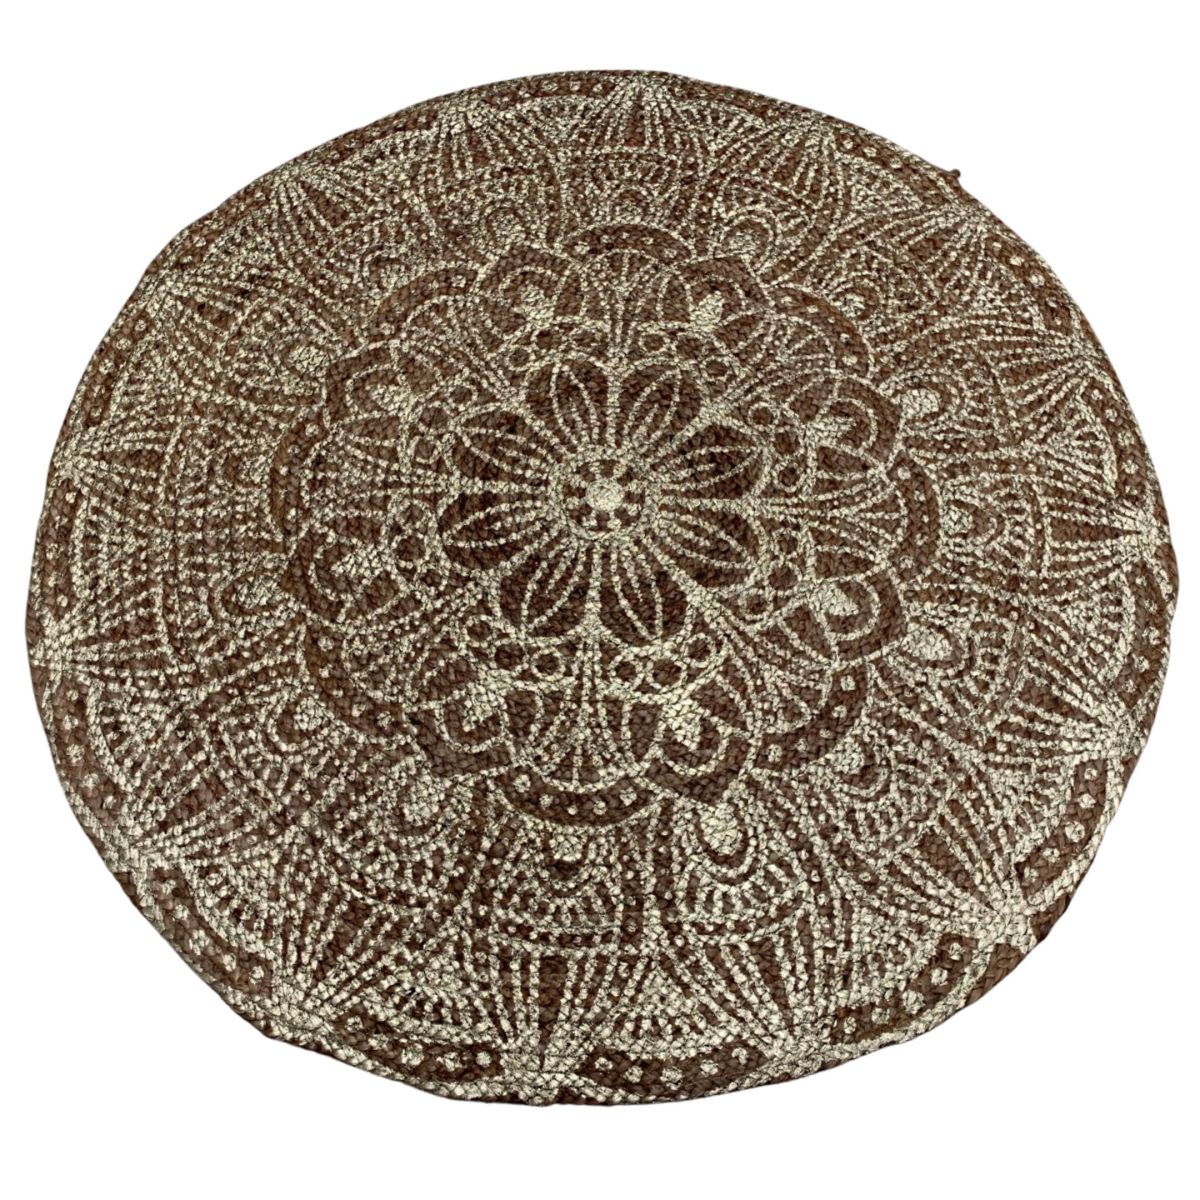 rug oriental bohemain braided hemp with golden lotus flower print 200cm